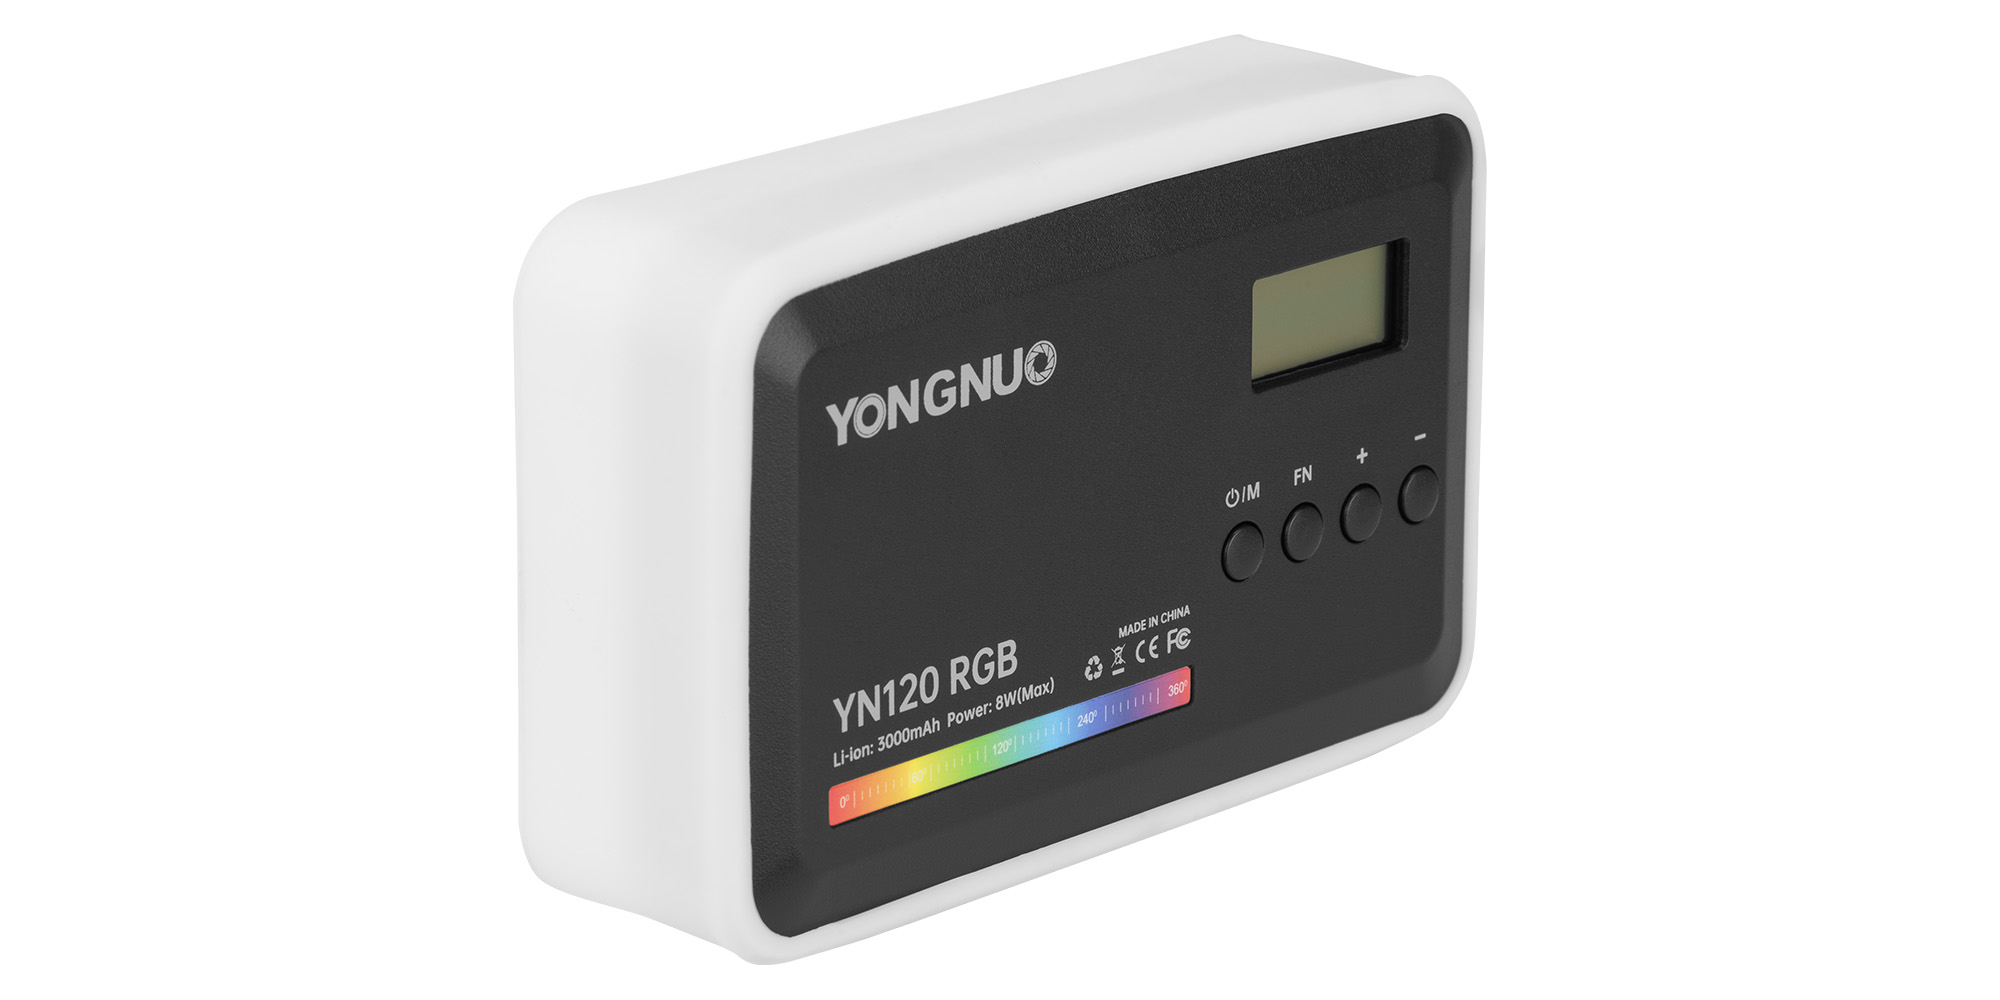 Lampa LED Yongnuo YN120 - RGB, WB (2500 K - 9900 K) - Długi czas działania